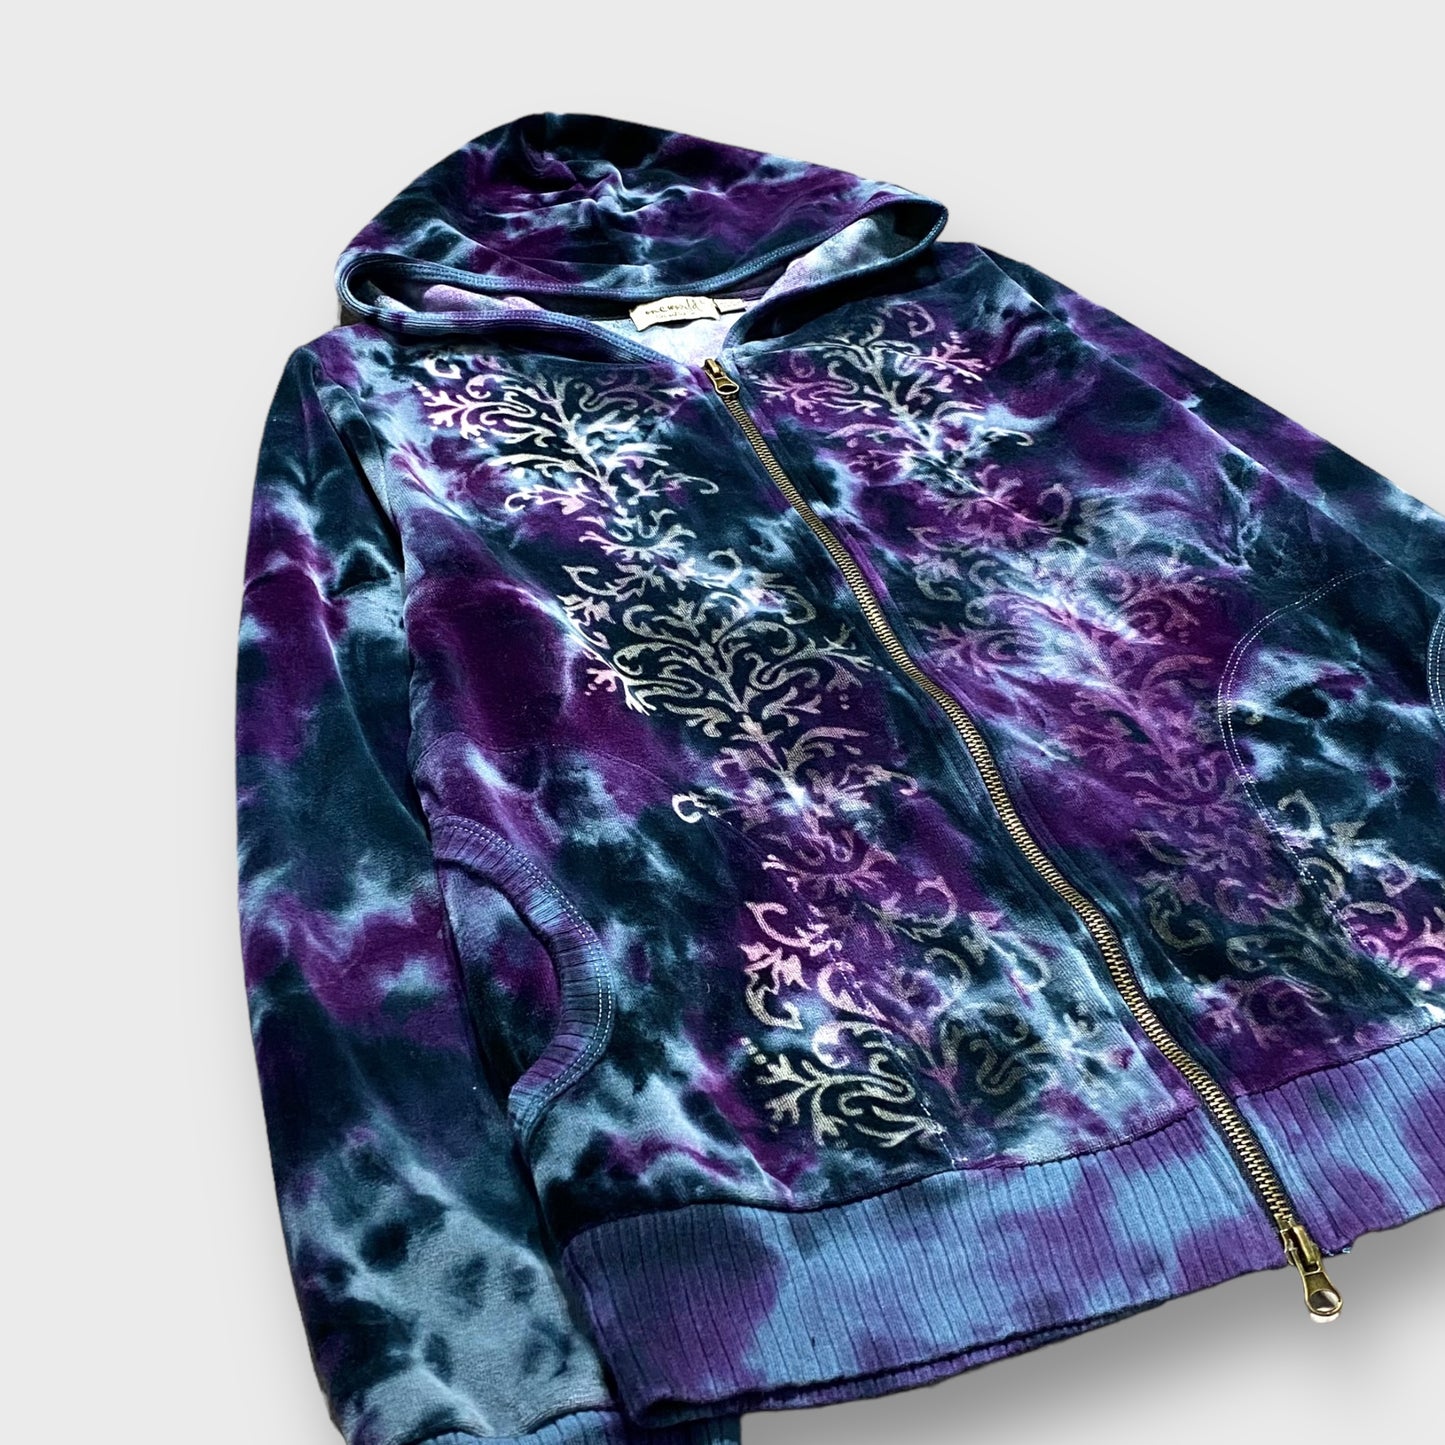 Ornament pattern double zip velour hoodie